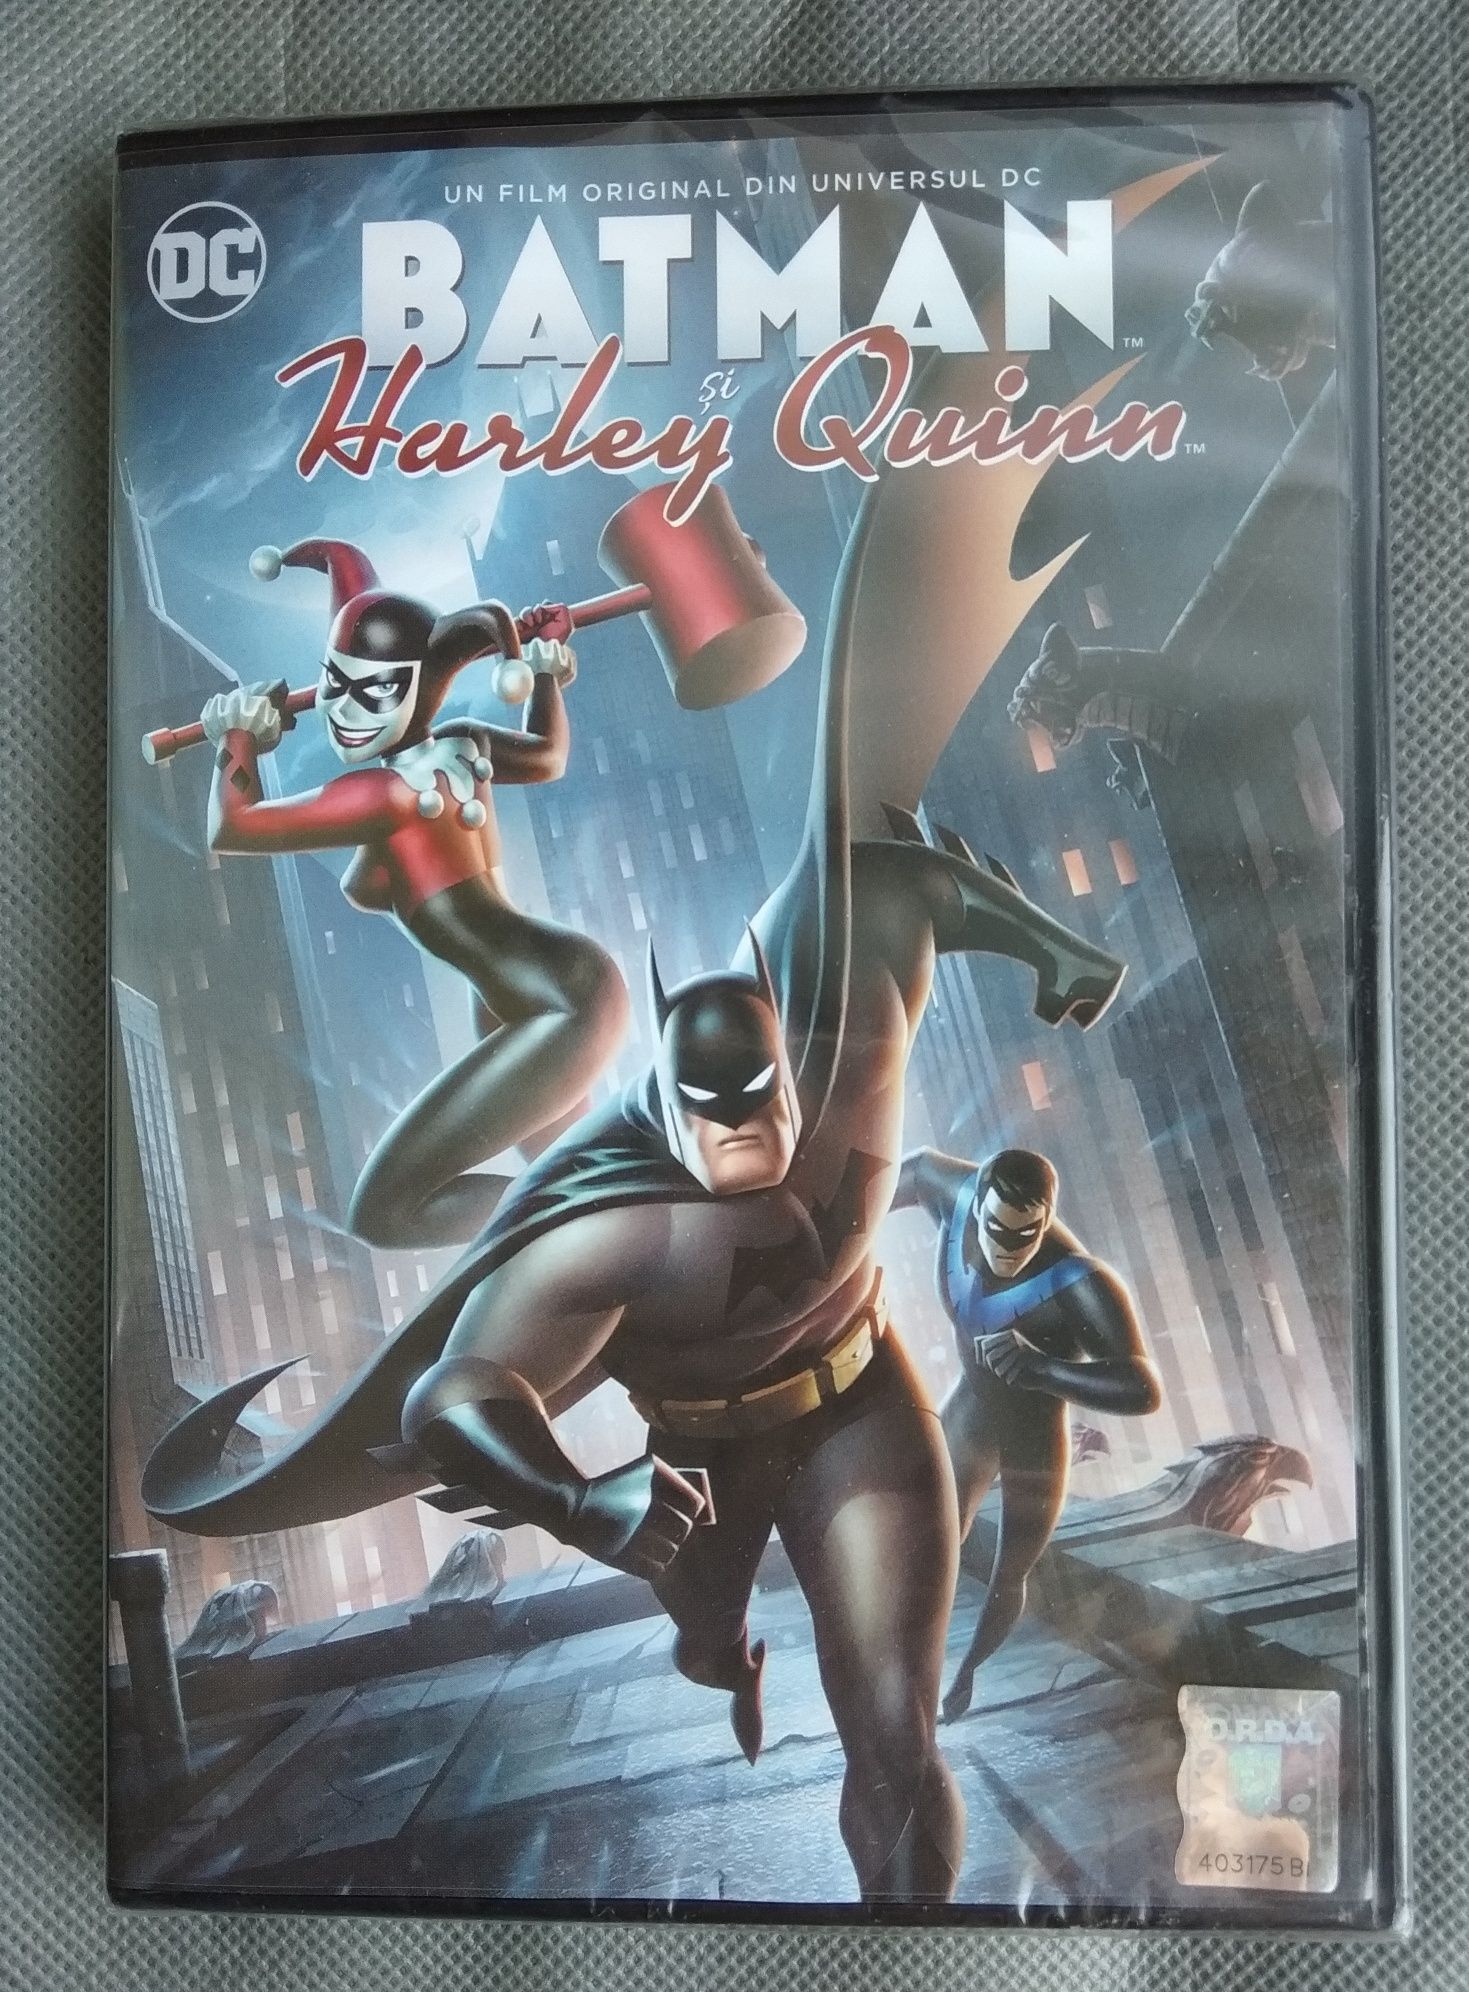 BATMAN și Harley Quinn [DVD]. Subtitrat în română